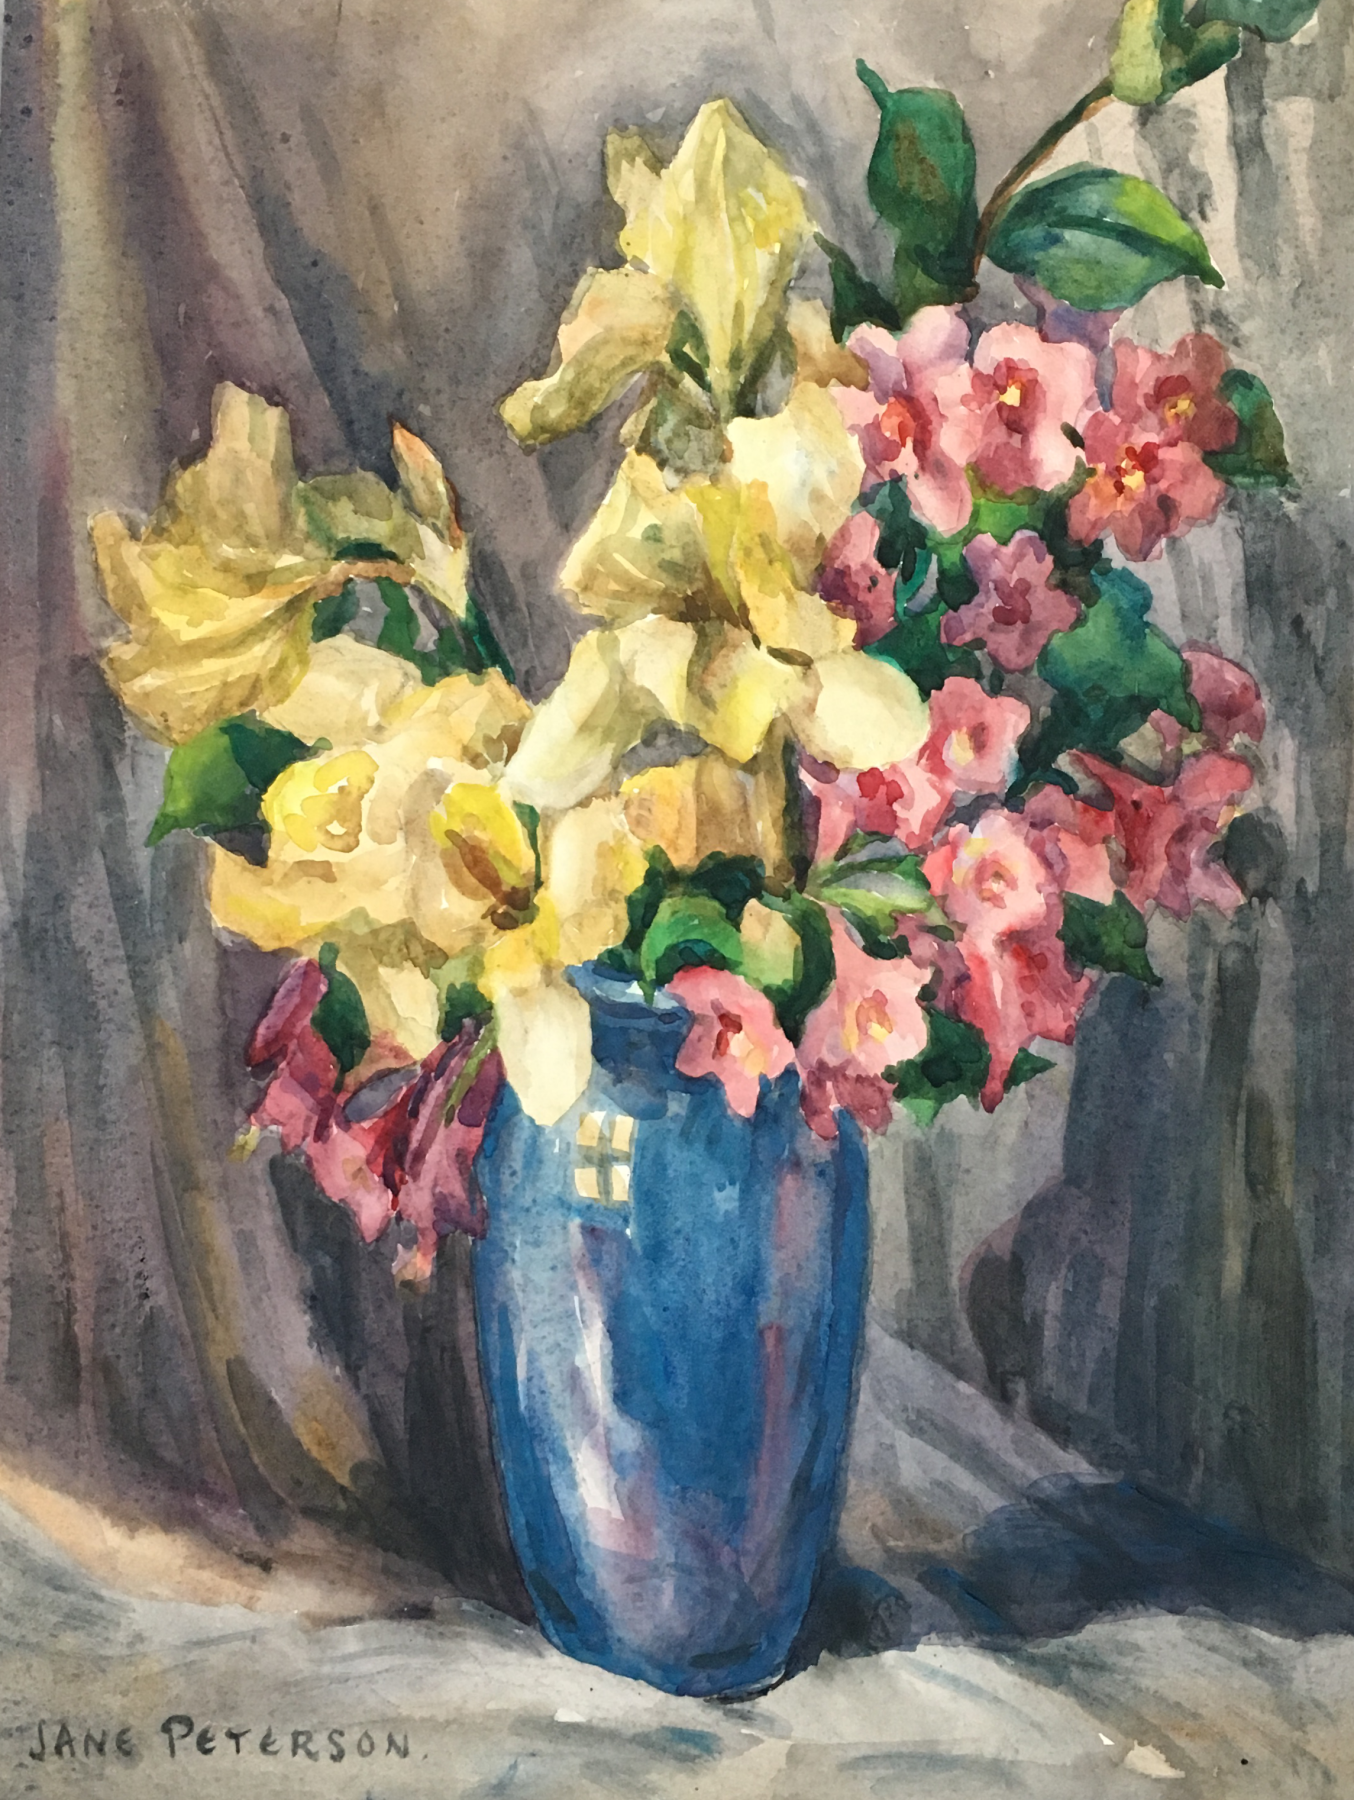 Jane Peterson, Irises and Weigela in Blue Vase